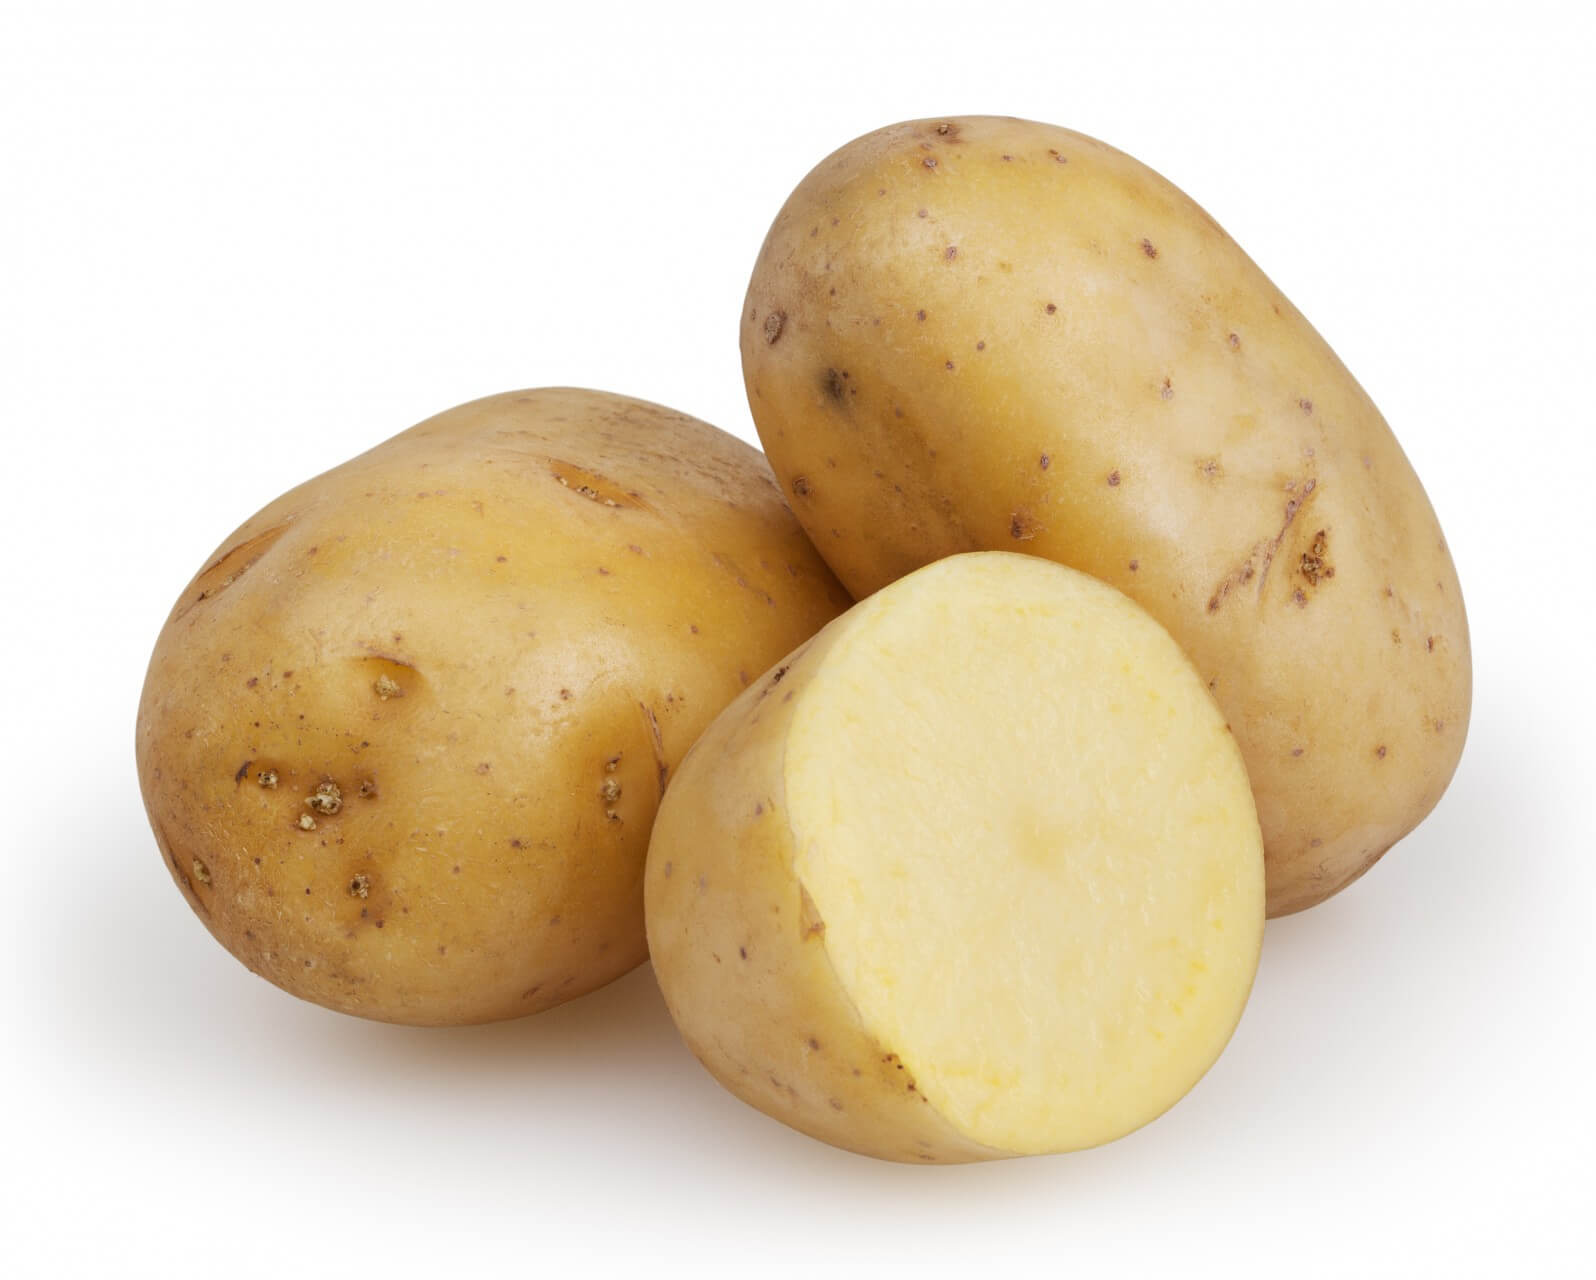 Russet Potato Products & Other Potato Varieties Ventura County